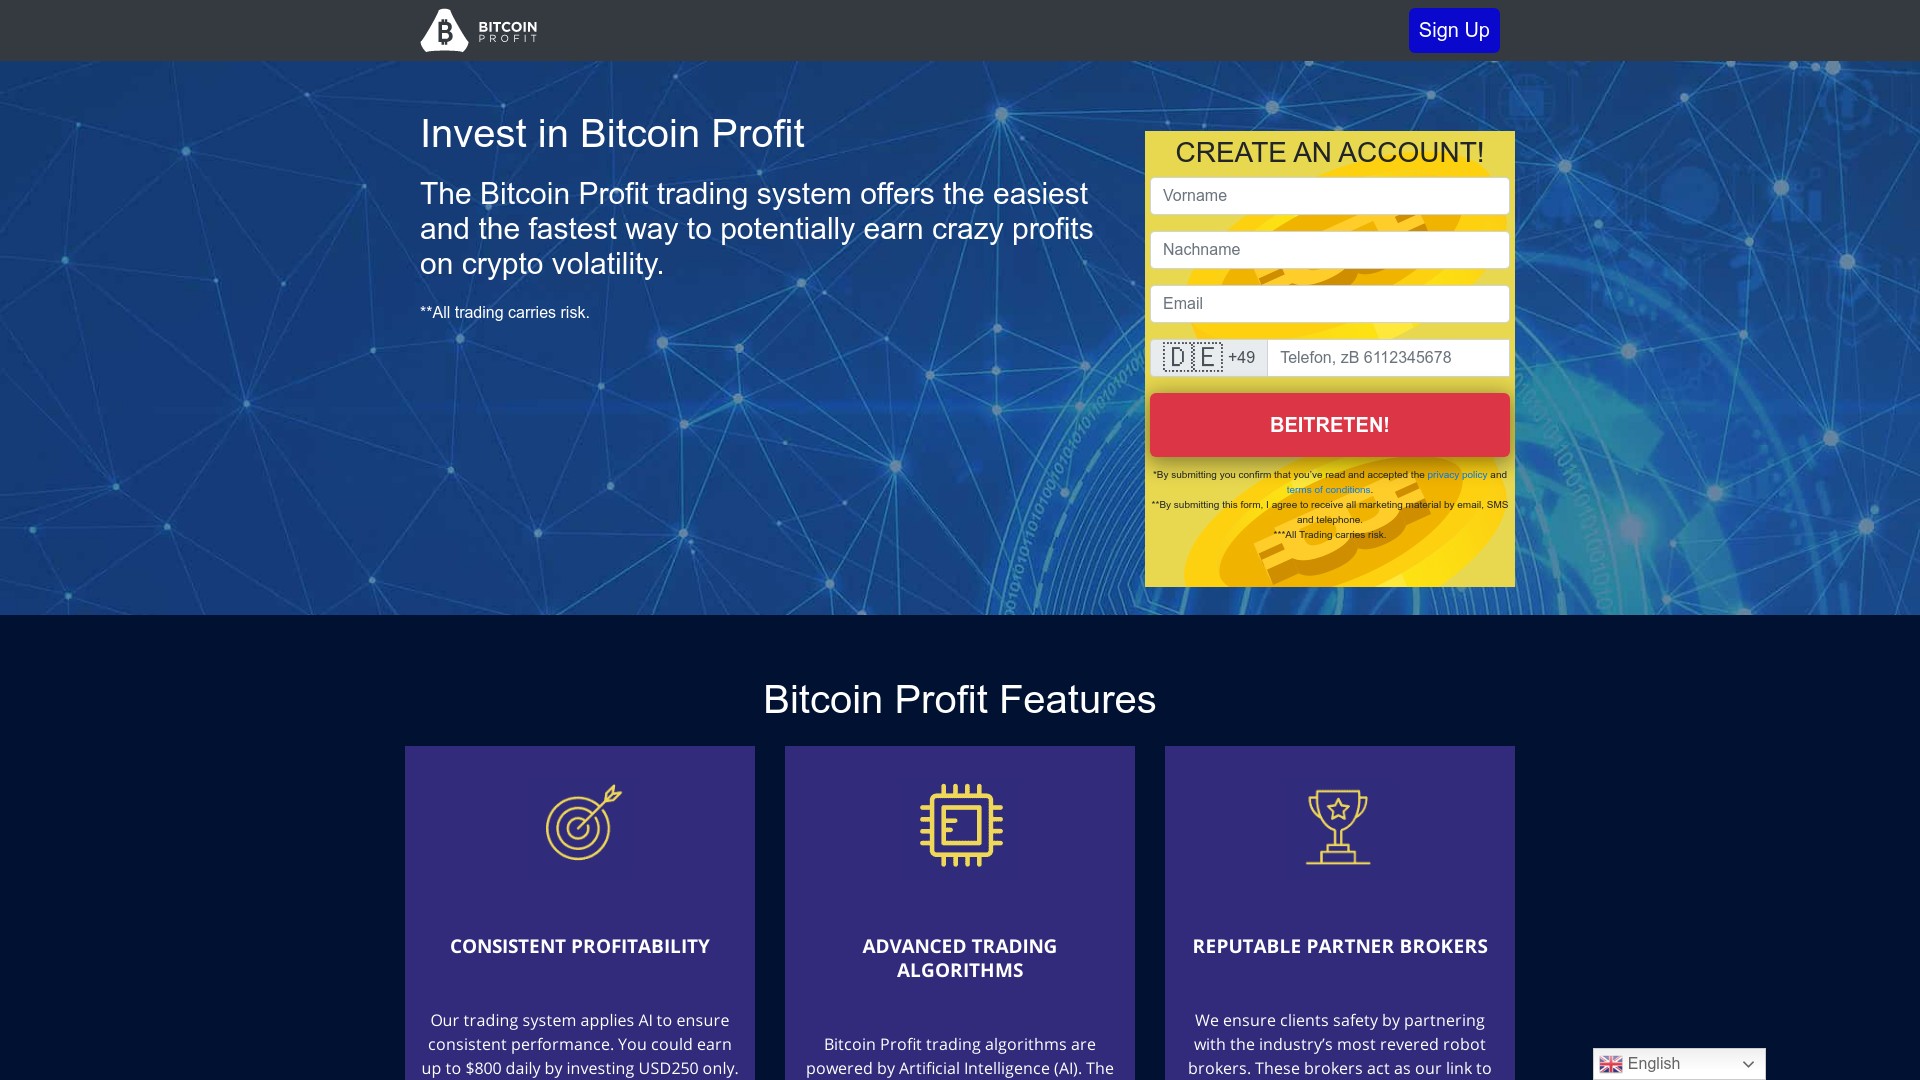 British Bitcoin Profit at bitcoin-evolutionpro.com